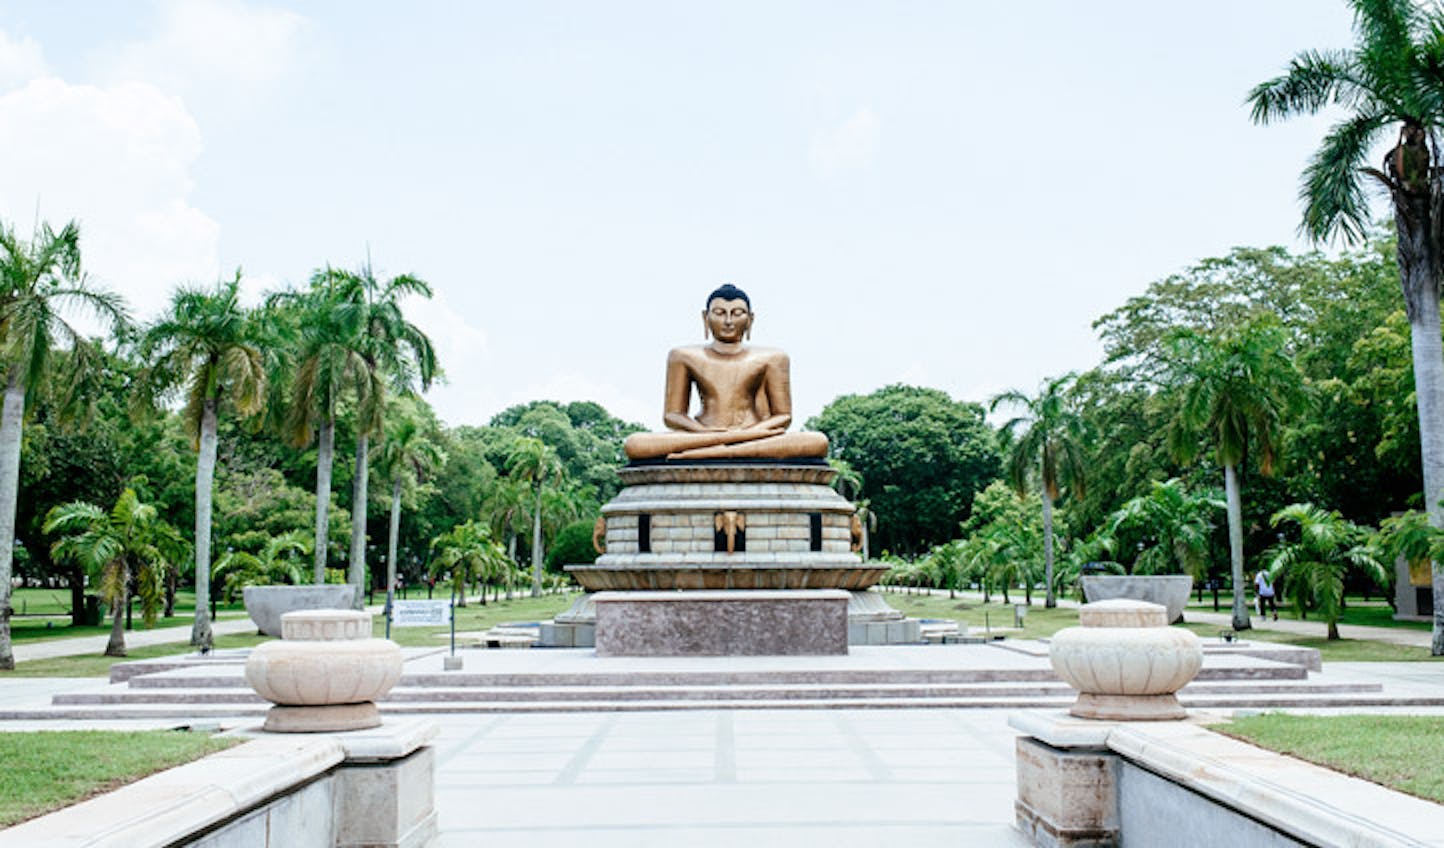 Discover intricate Sri Lankan statues